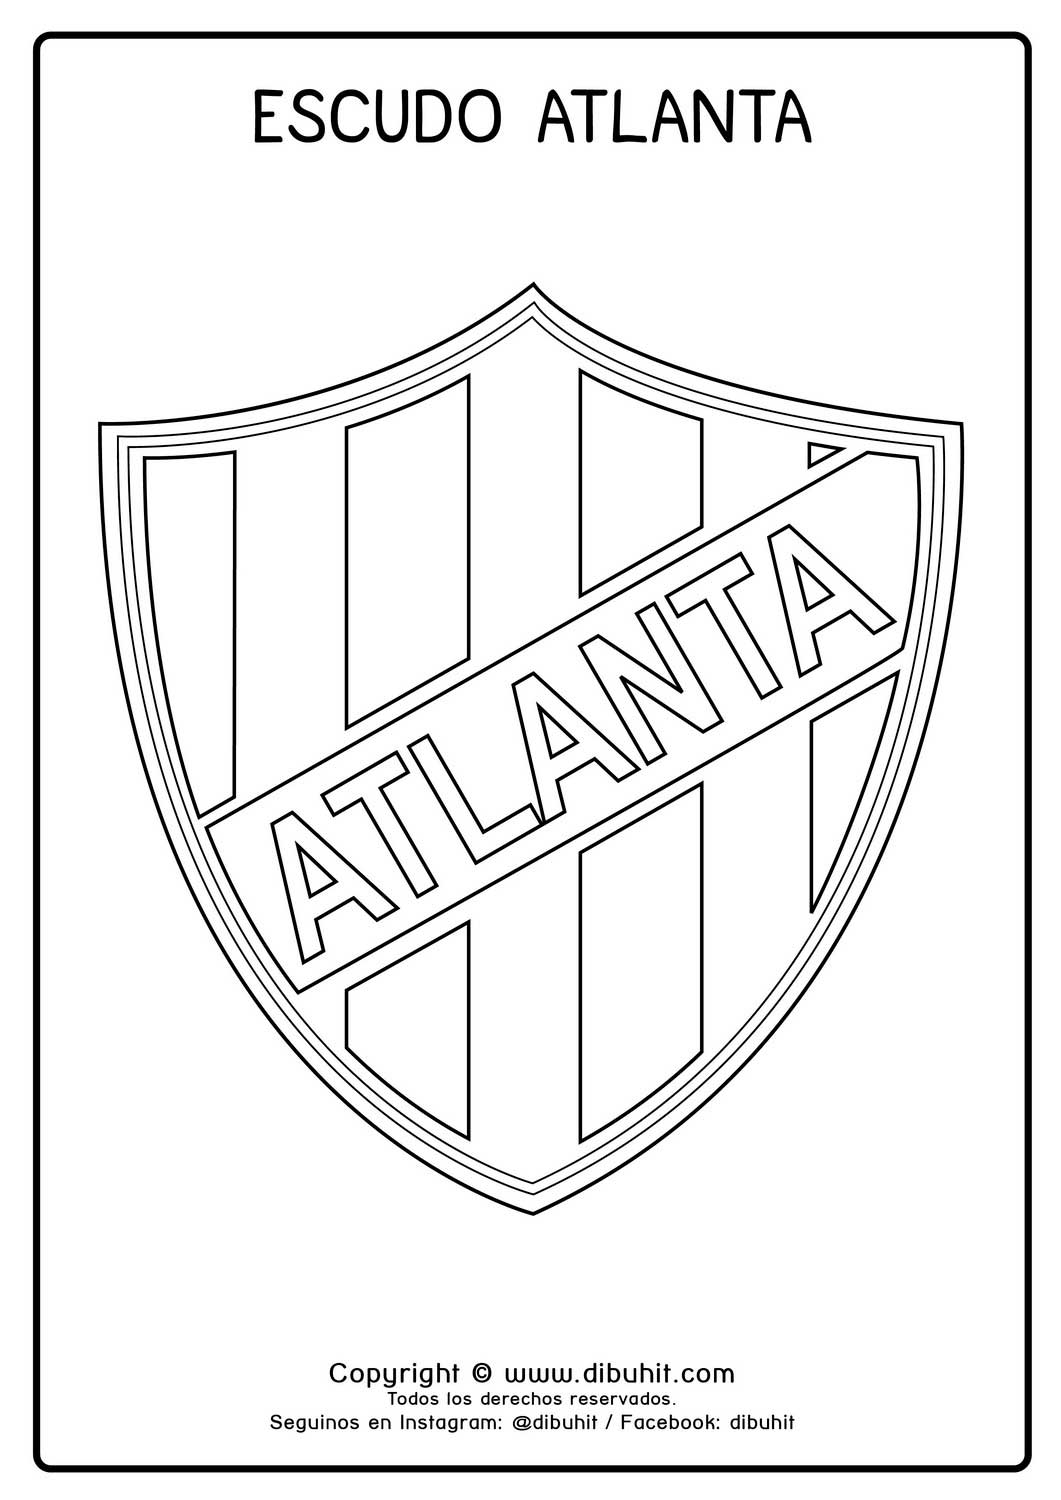 Escudo de futbol para colorear de atlanta